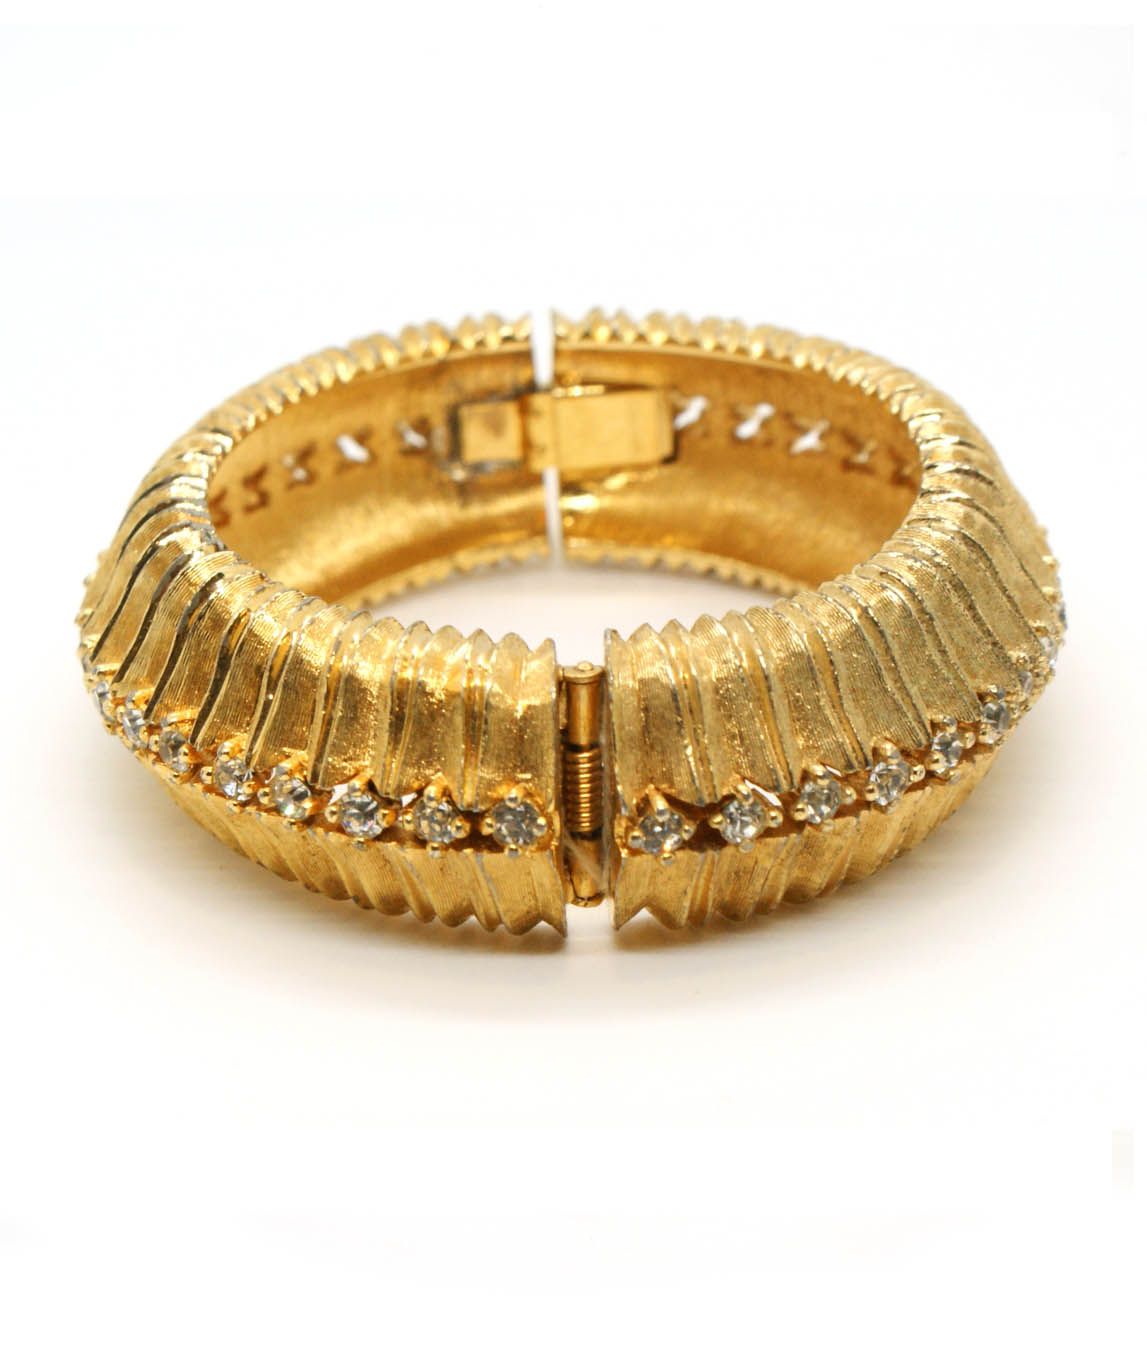 Joseph Mazer Gold and Rhinestone Bangle Bracelet | Gadelles VIntage